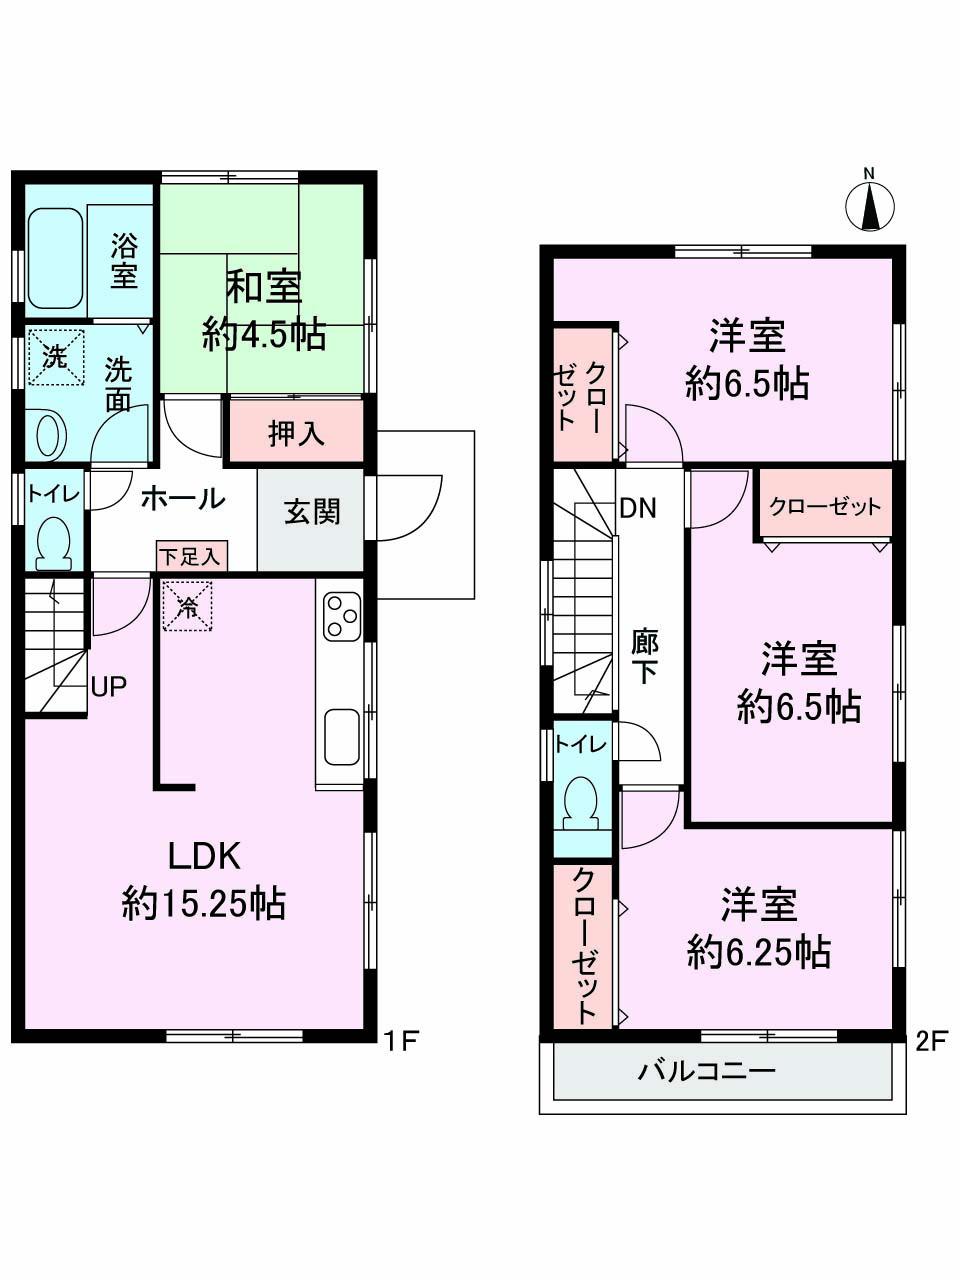 Floor plan. 28,900,000 yen, 4LDK, Land area 127.12 sq m , Building area 95.24 sq m